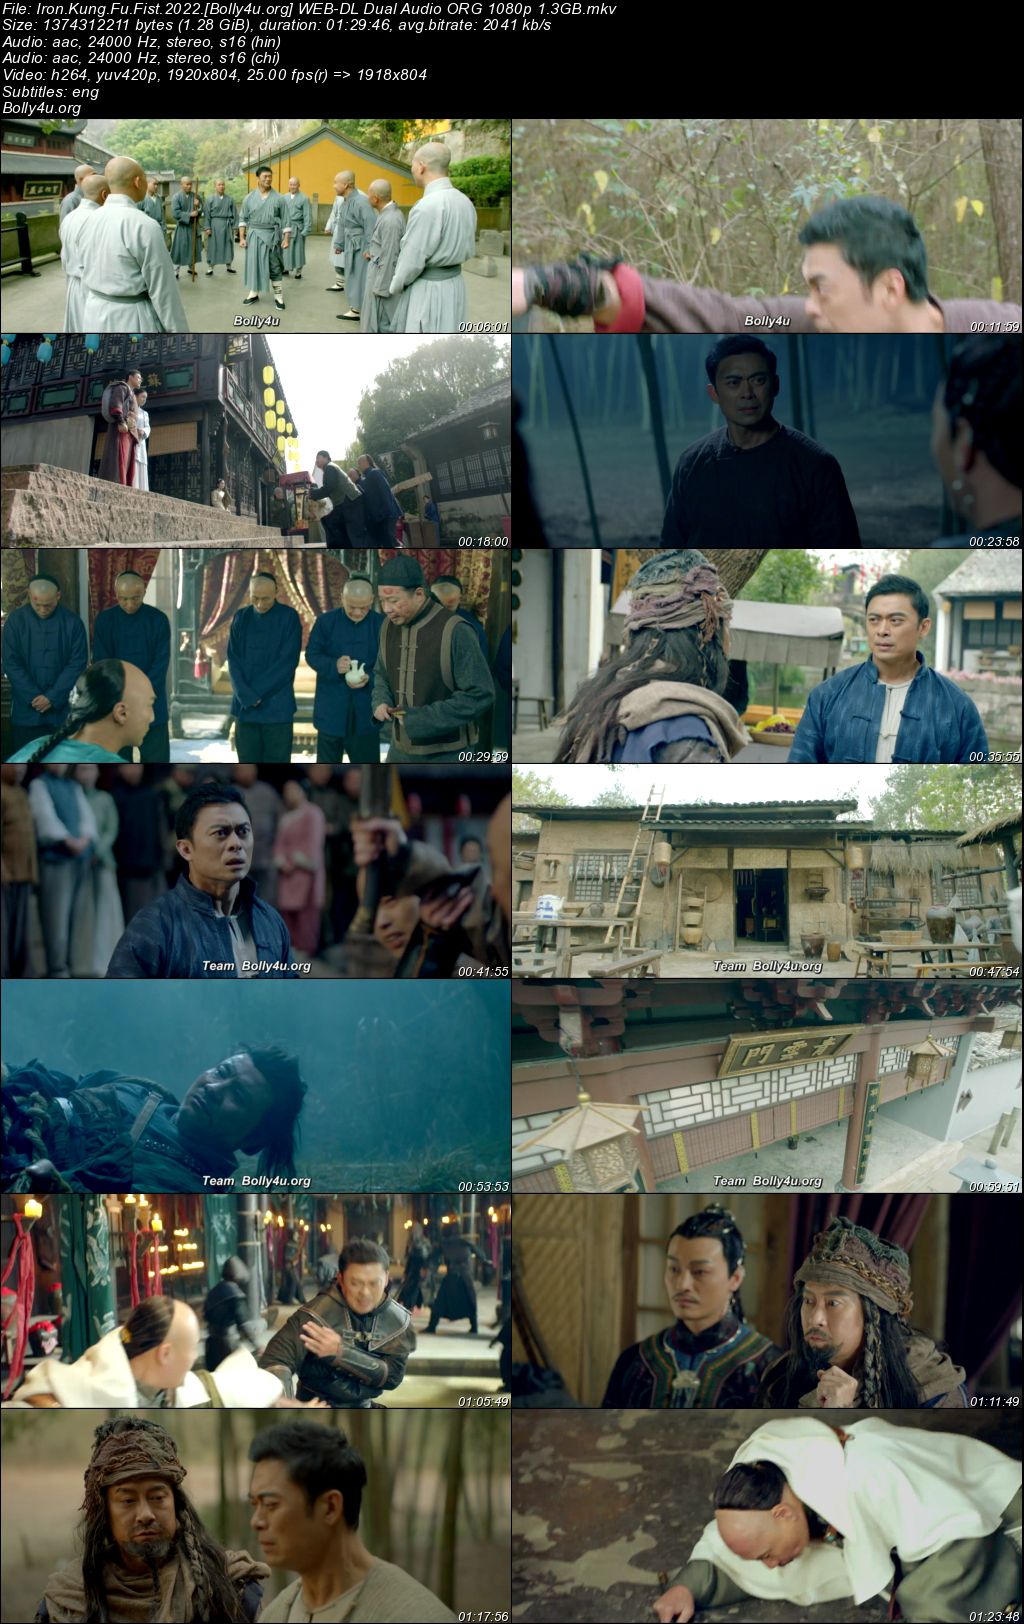 Iron Kung Fu Fist 2022 WEB-DL Hindi Dual Audio ORG Full Movie Download 1080p 720p 480p